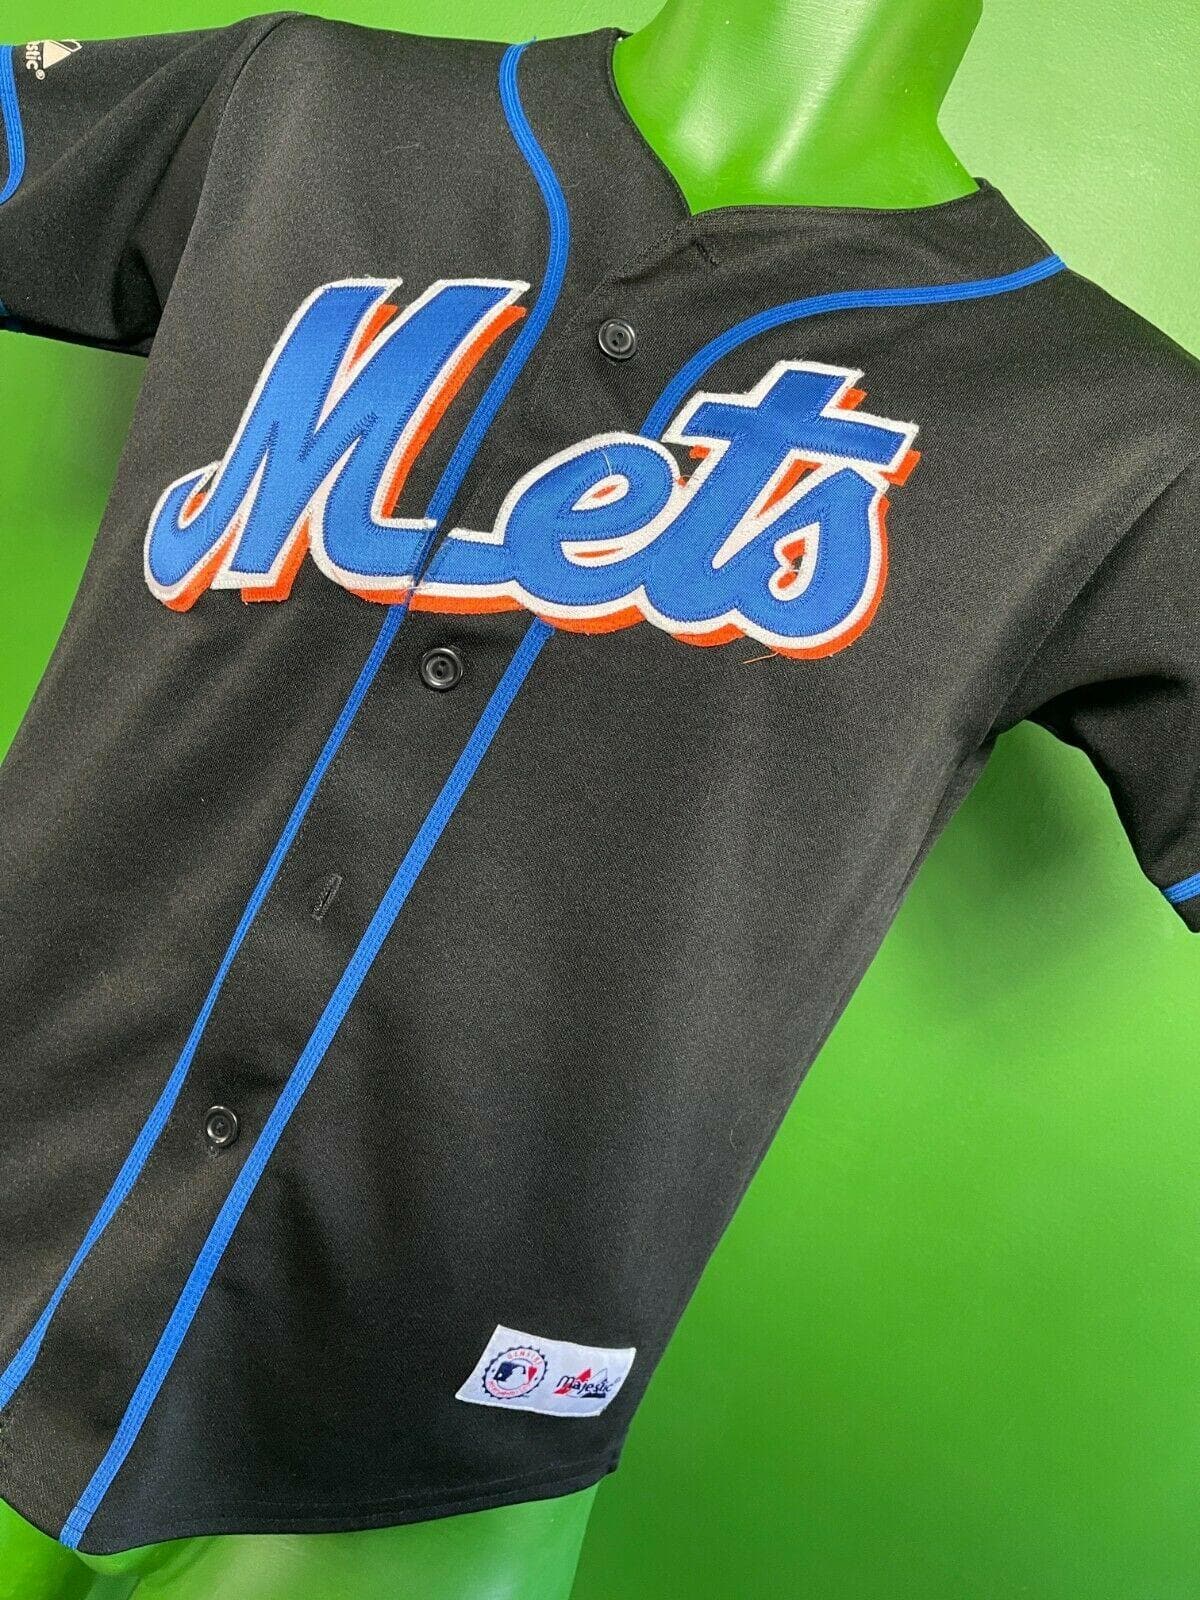 MLB New York Mets Majestic Stitched Baseball Jersey Youth Medium 10-12